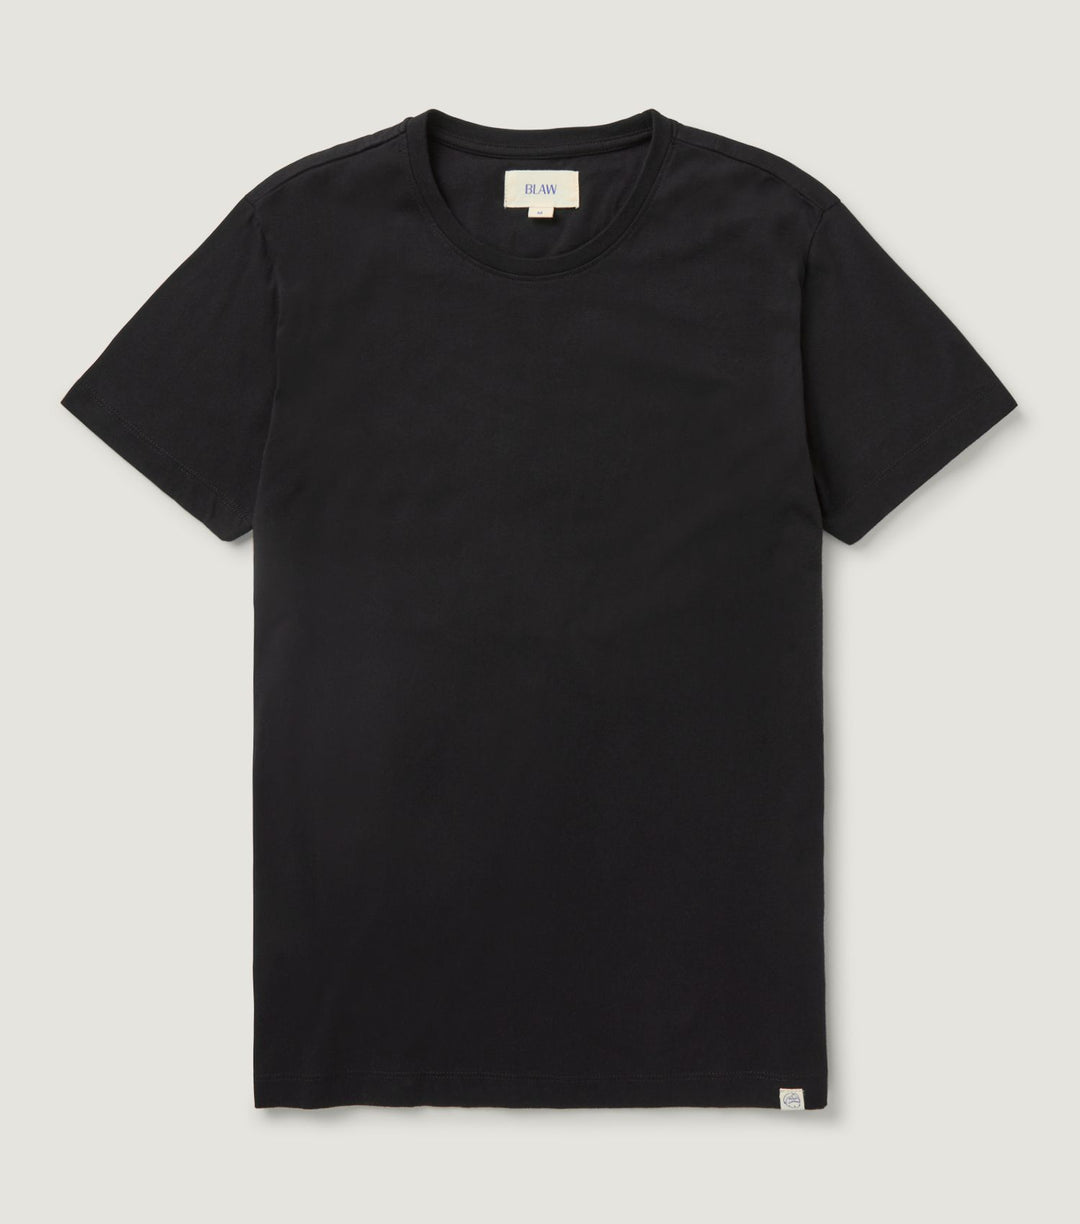 Basic Round Neck Pima Cotton T-shirt Black - BLAW